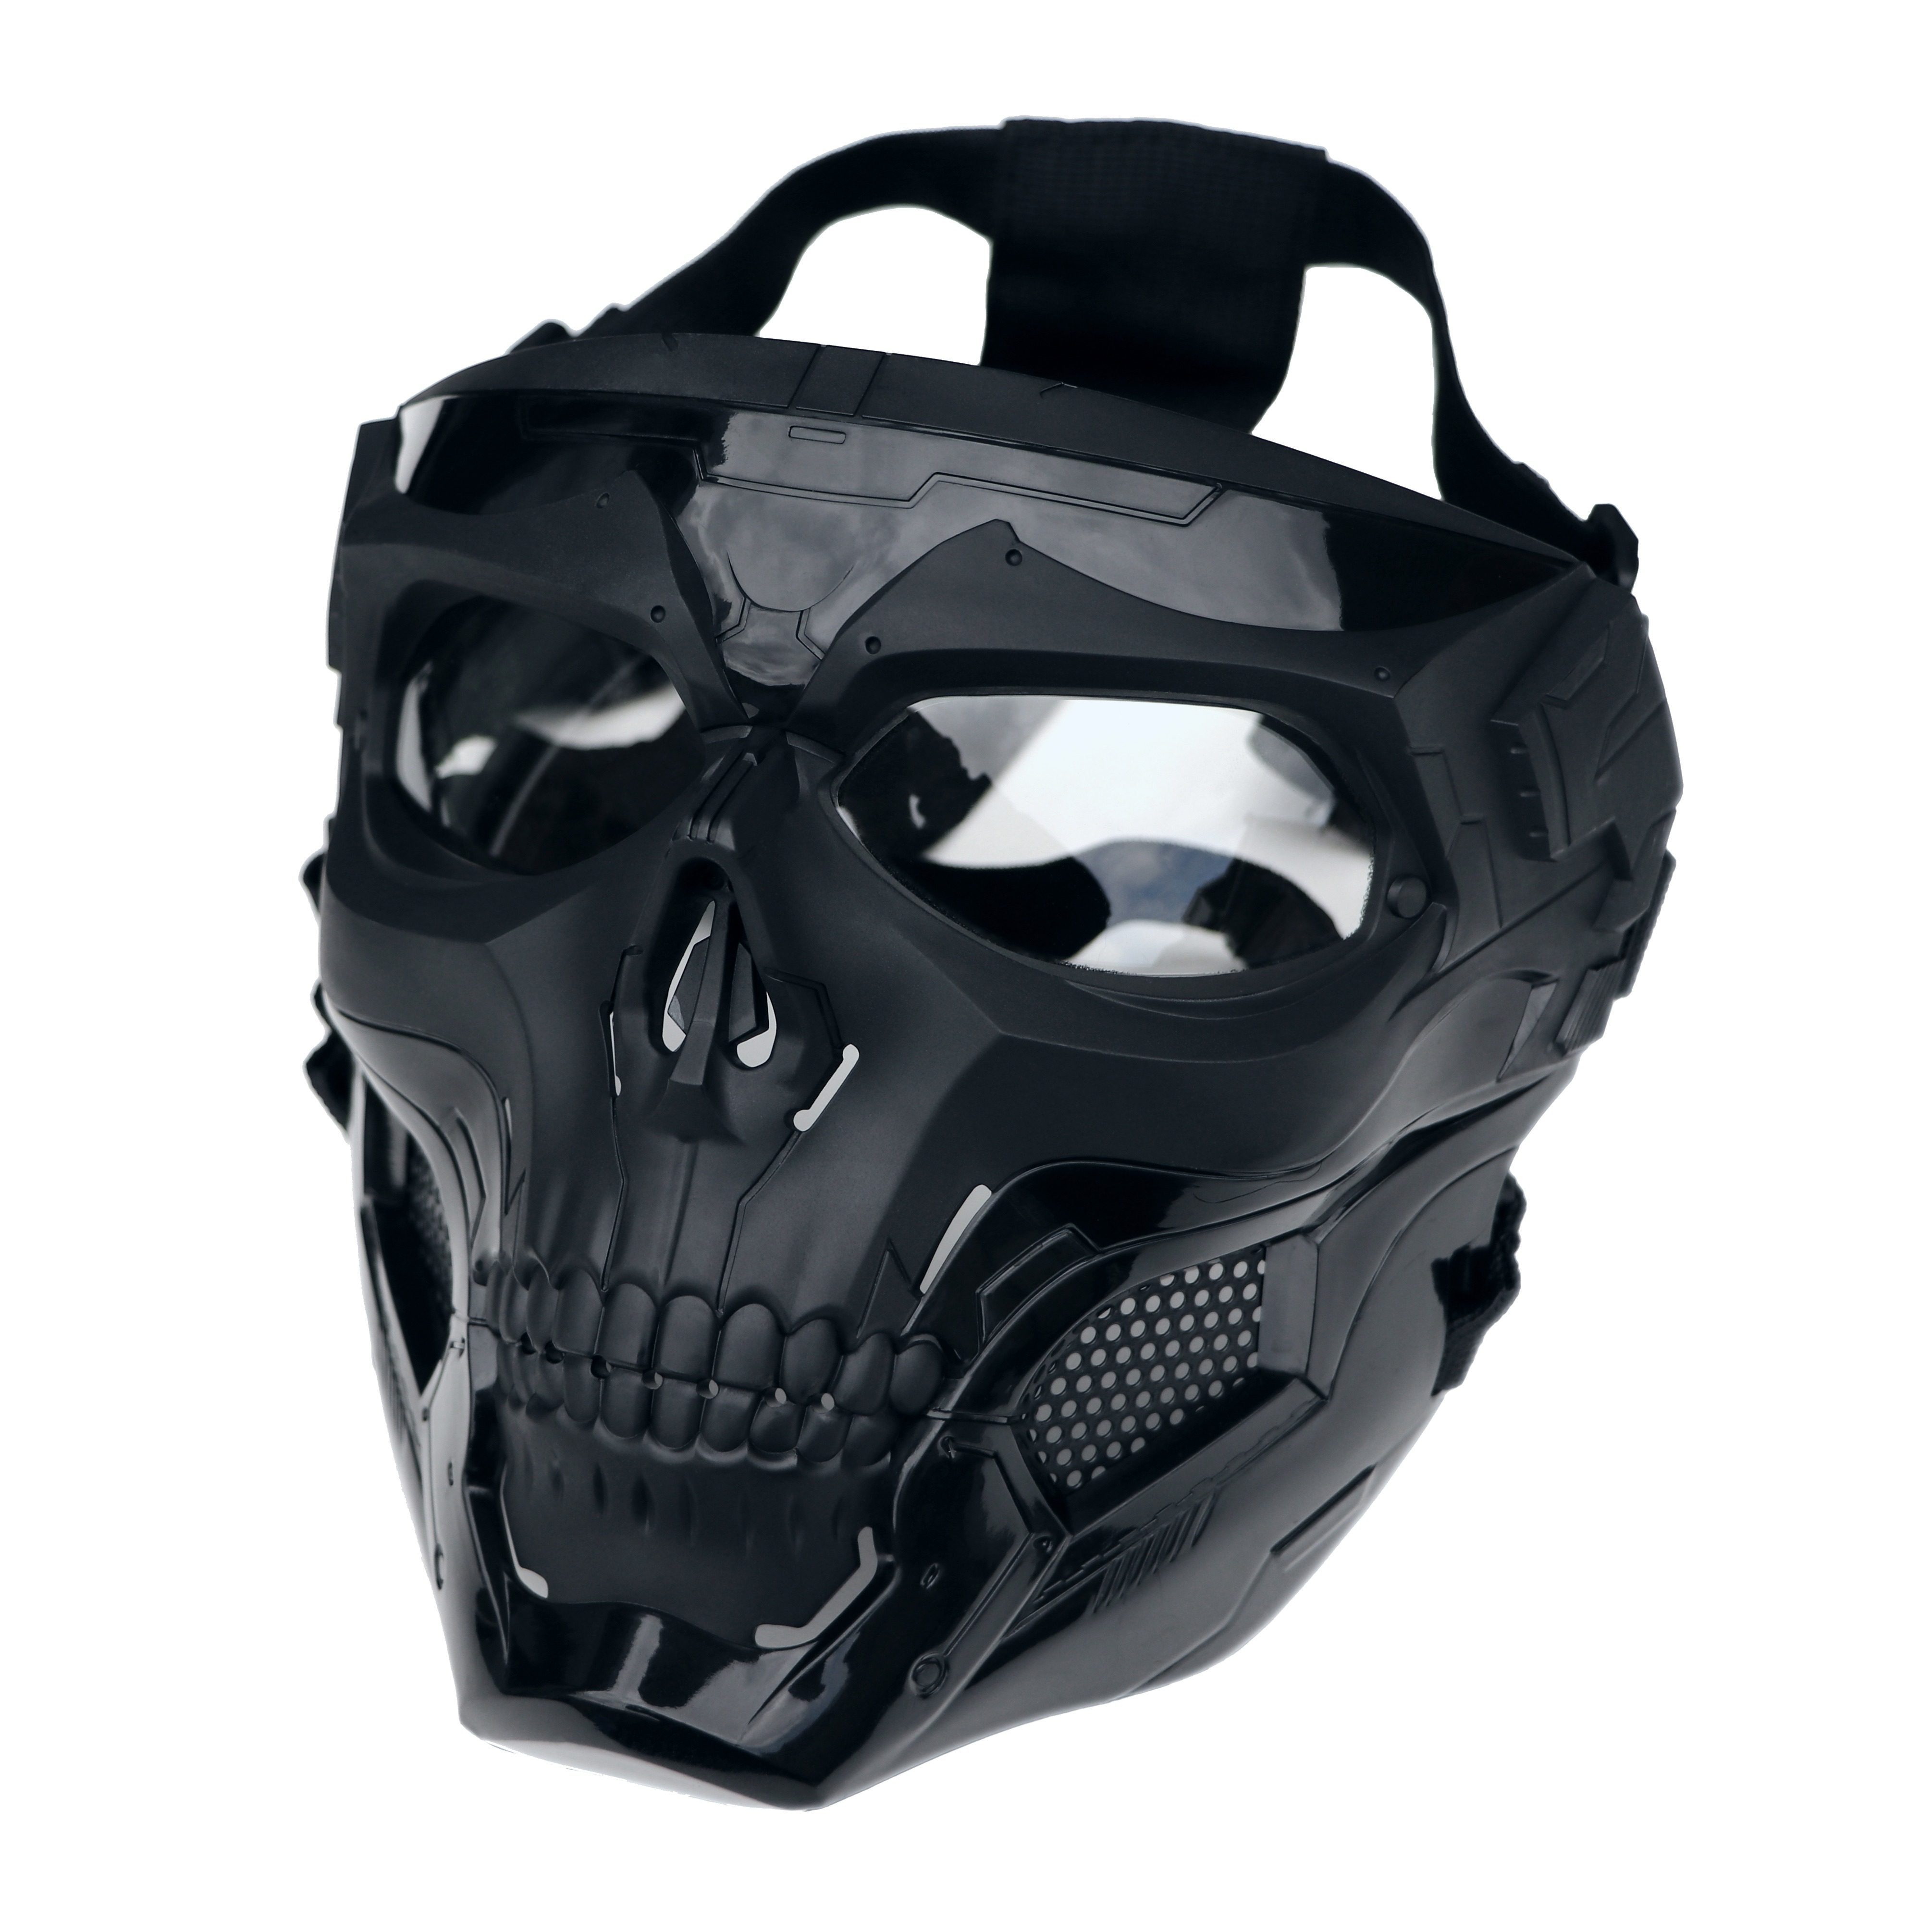 Skull Mask Masks & Prosthetics Accessories